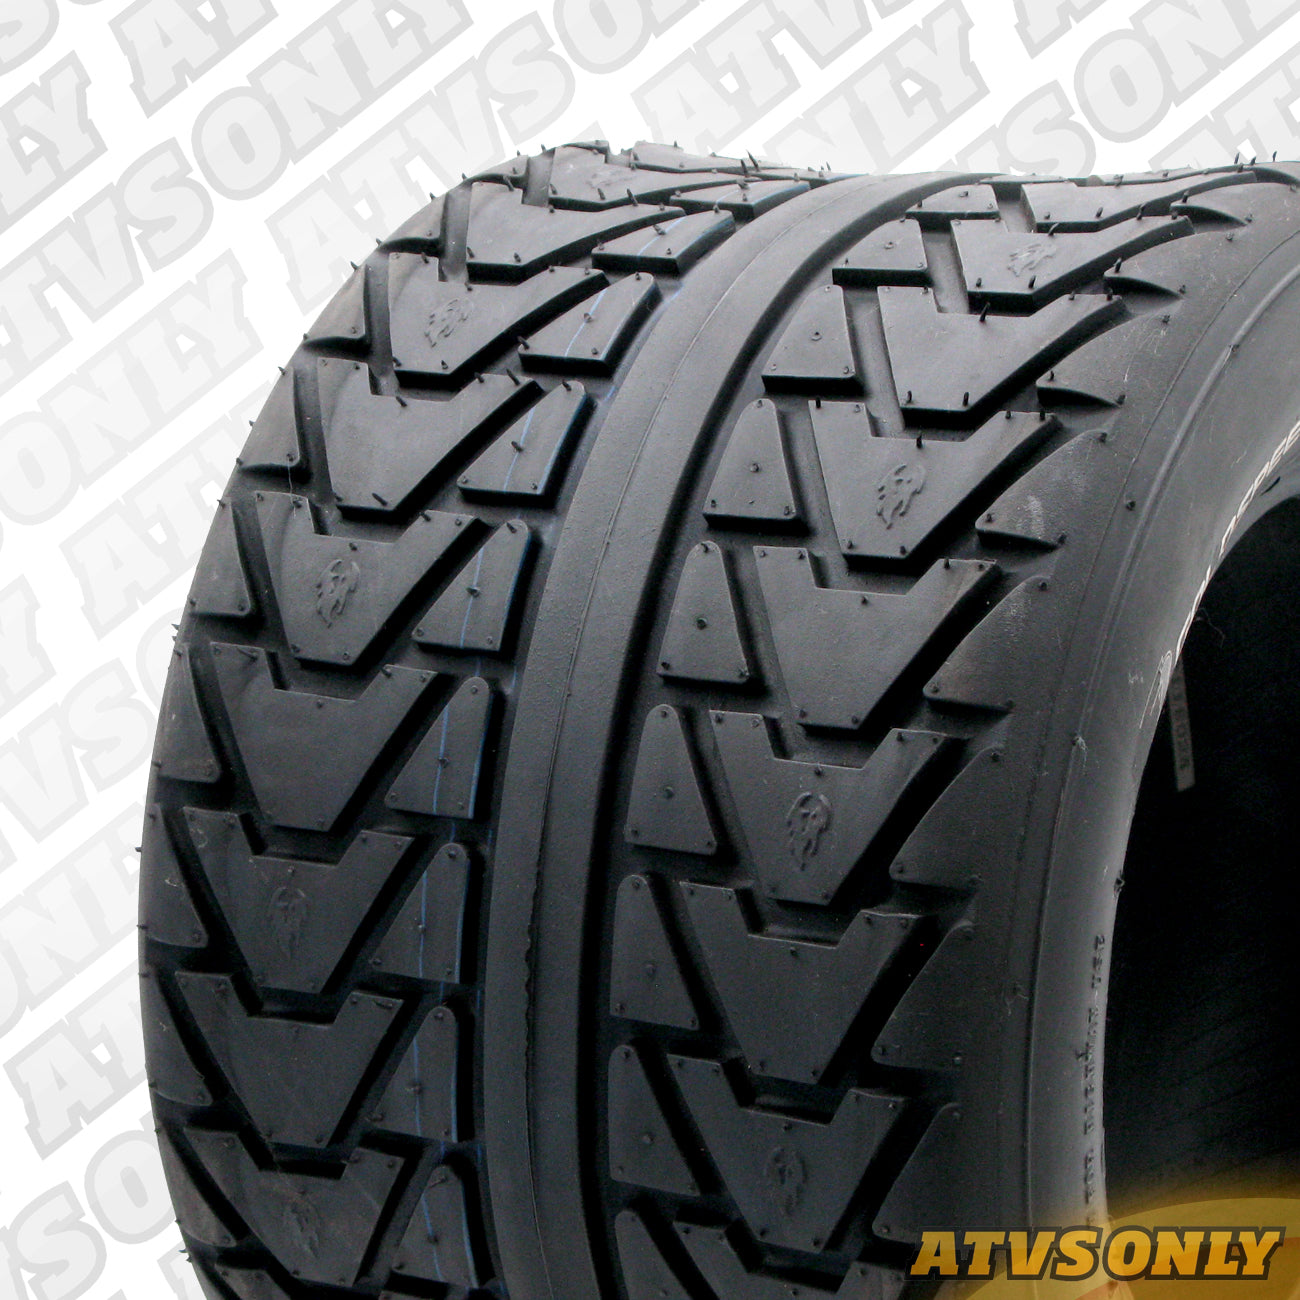 Tyres - SD “Street Devil” (E Marked) 10" Street/Road Tyre